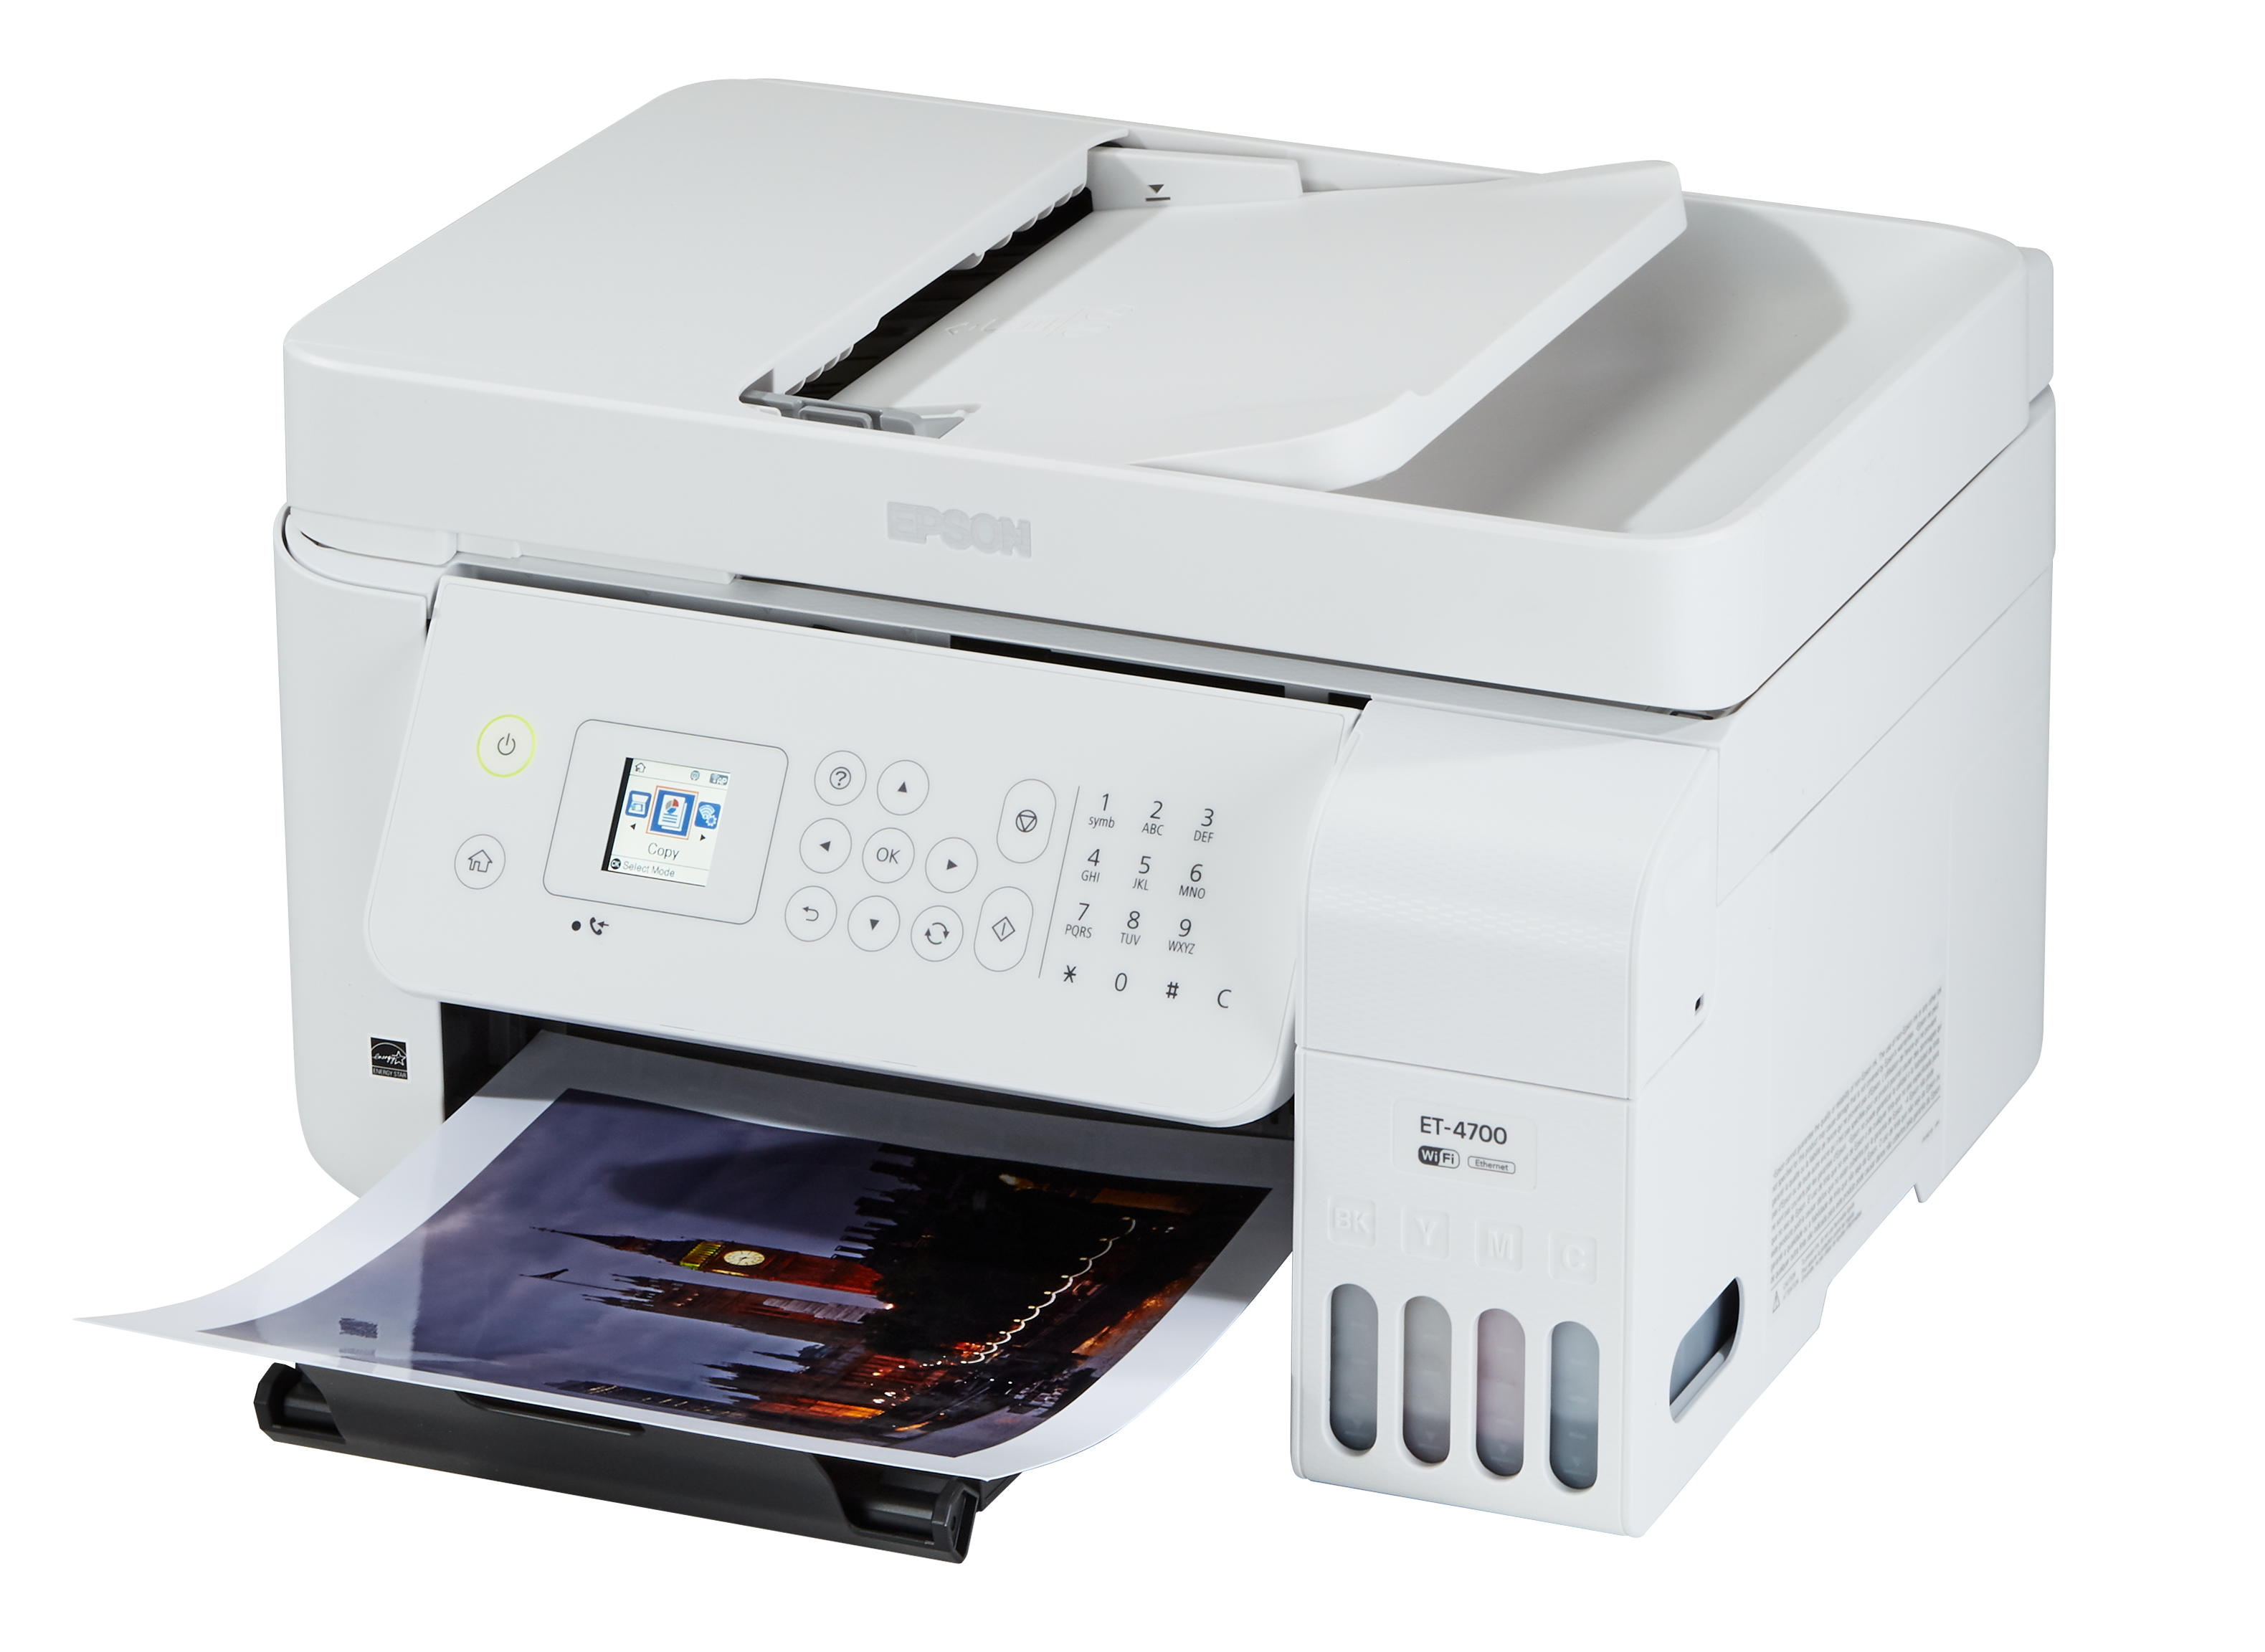 Epson EcoTank ET-4700 Printer Review - Consumer Reports